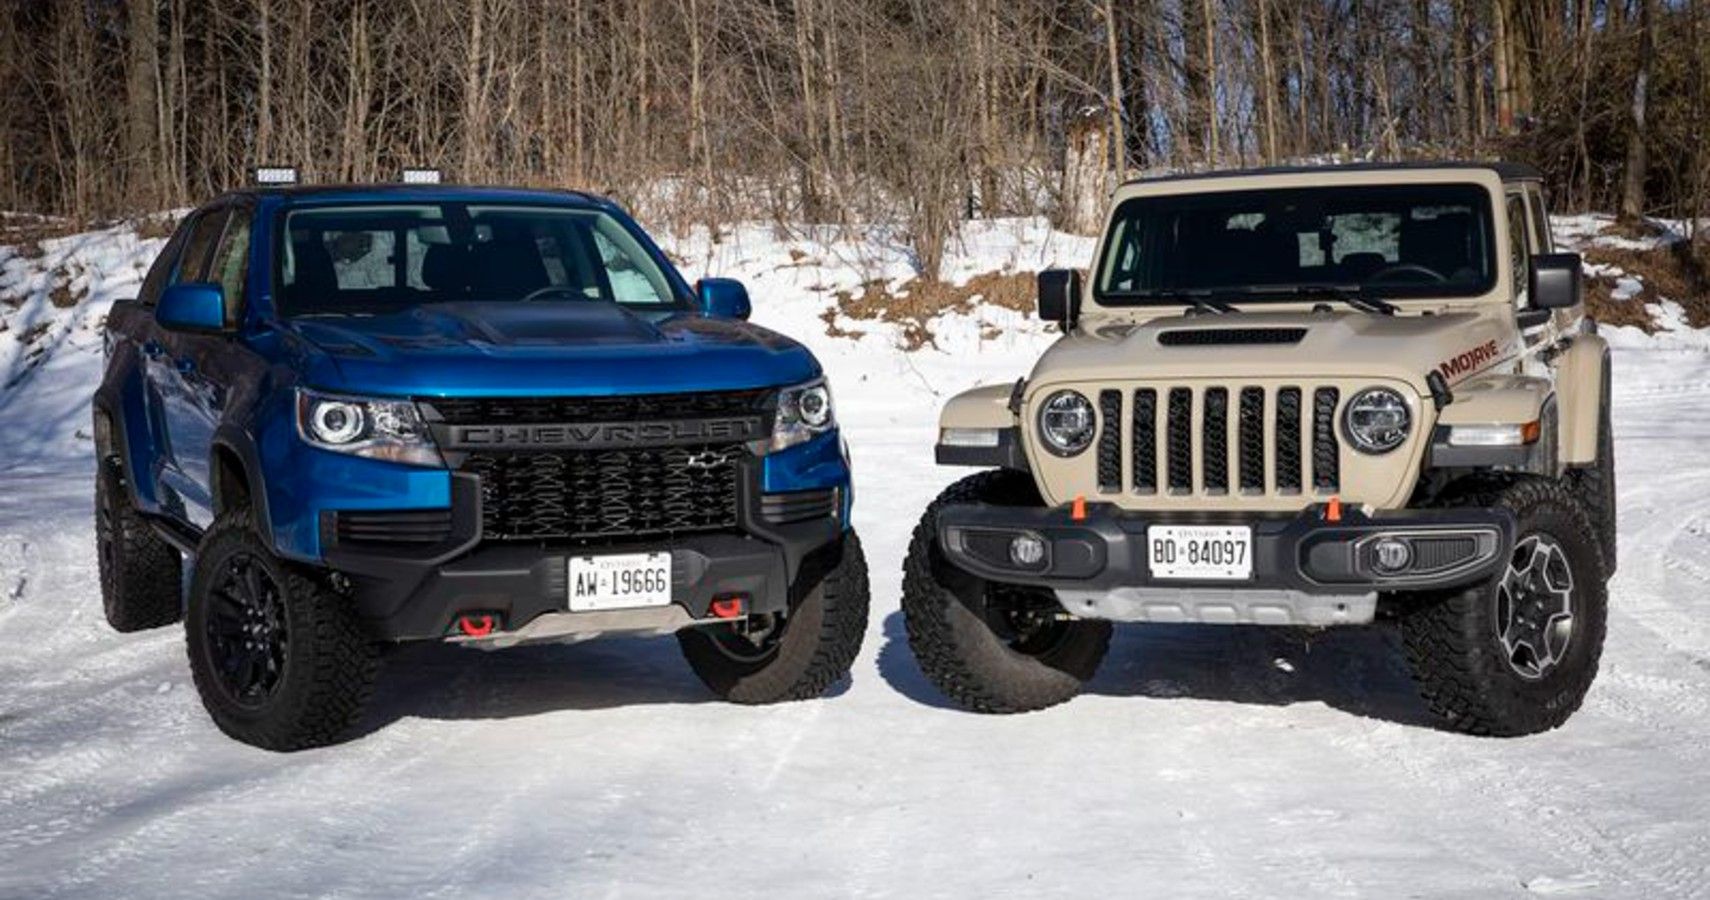 2020 Chevy Colorado and 2020 Jeep Gladiator